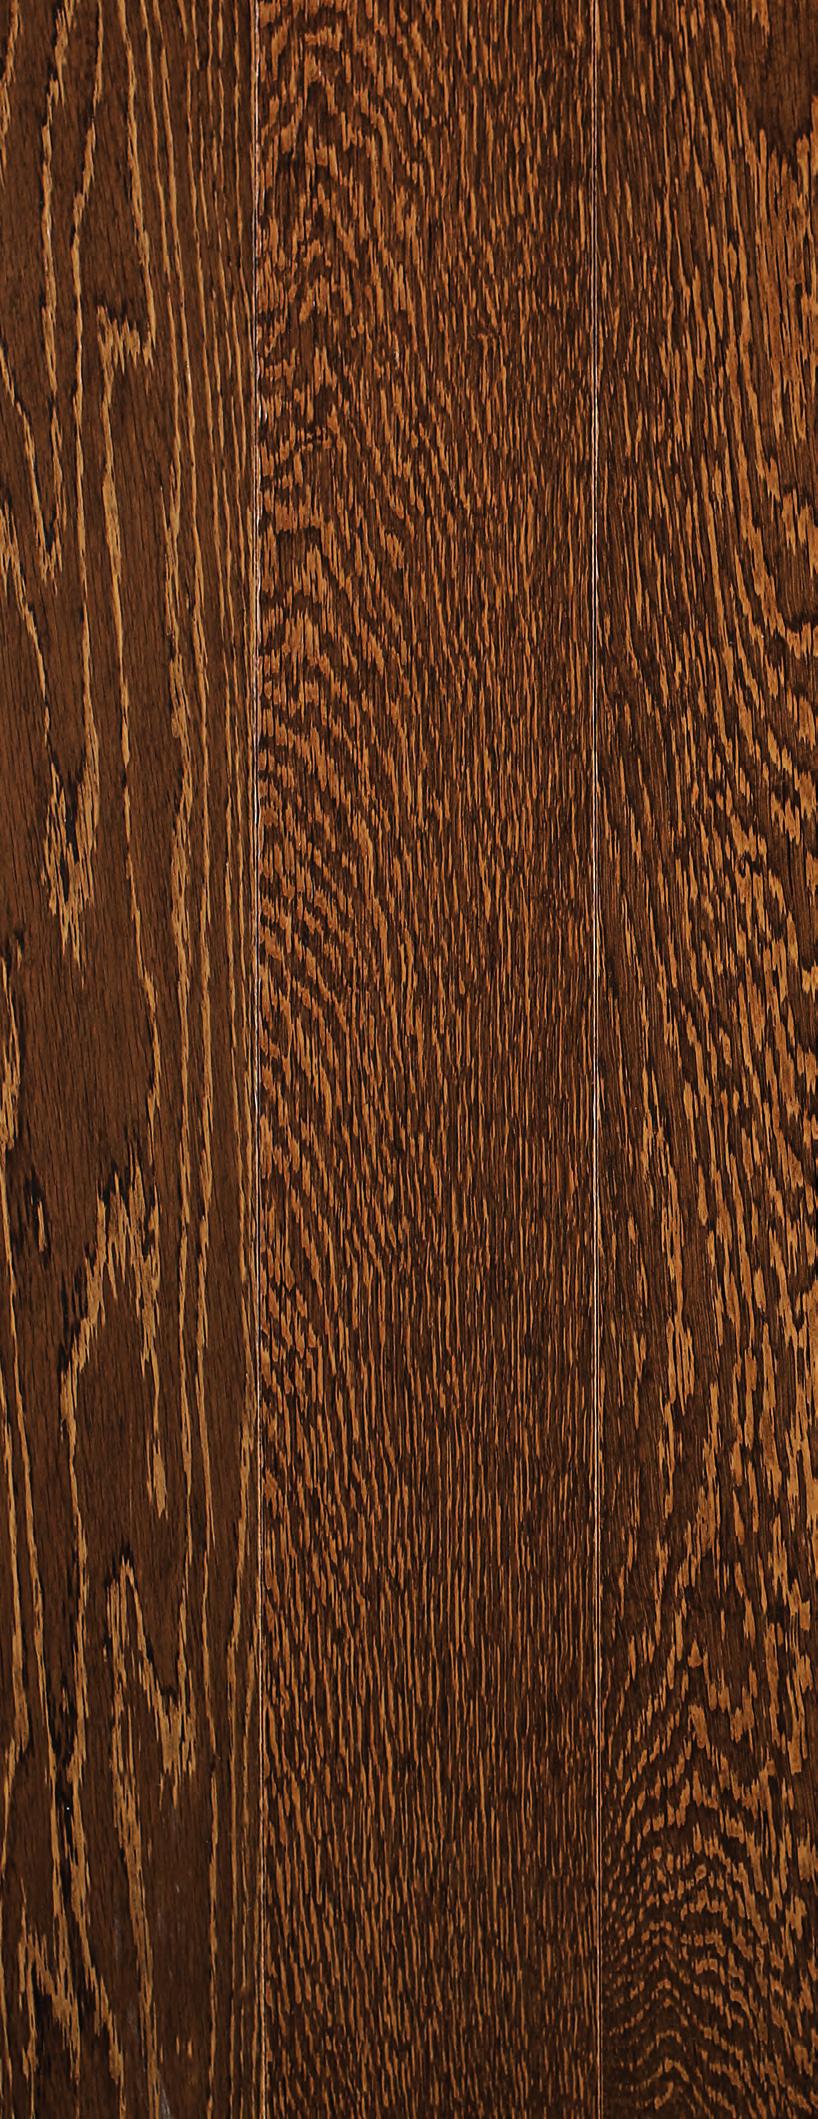 WildHazel One type of wood Priming: One coat of ISO